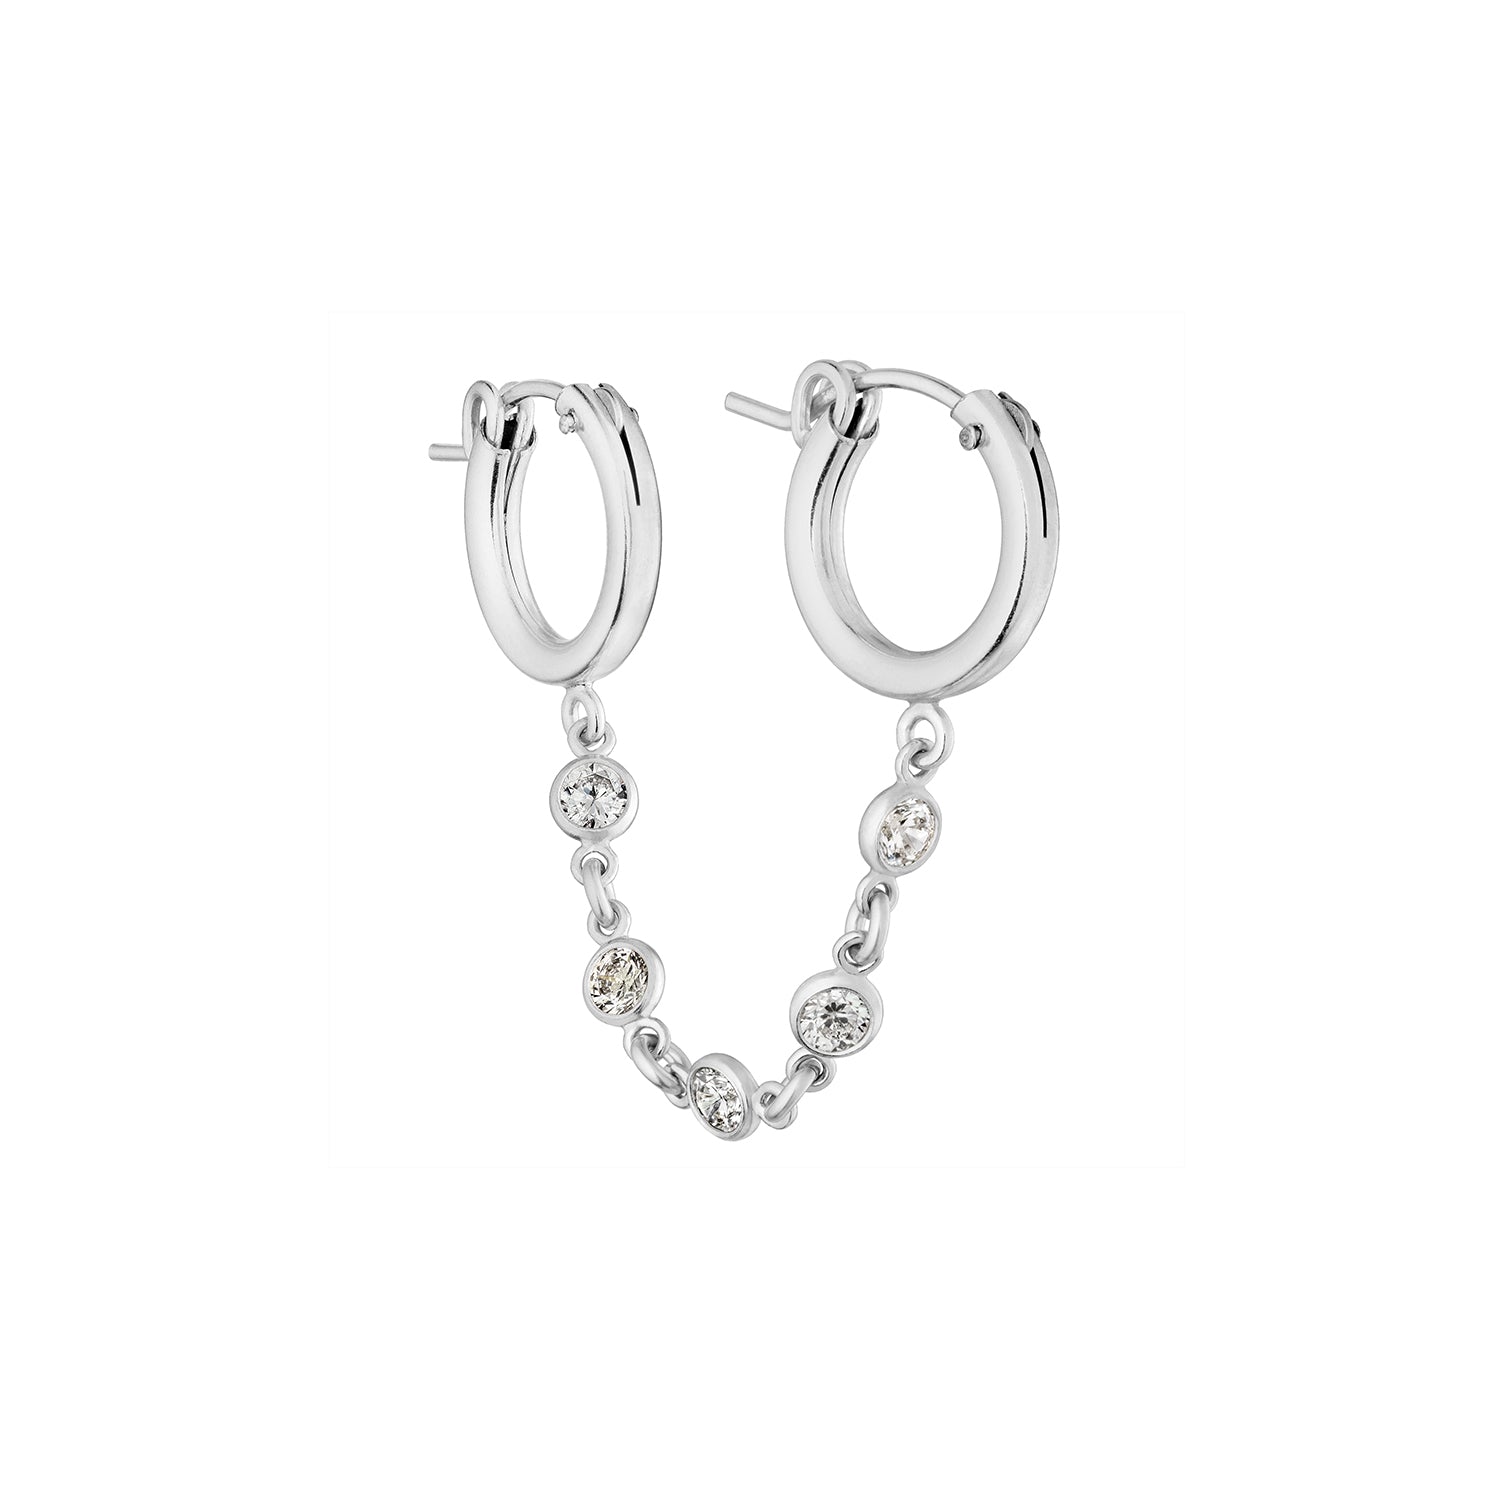 Ear Cuff With Chain Earrings Minimalist Chain Diamond Hoops 